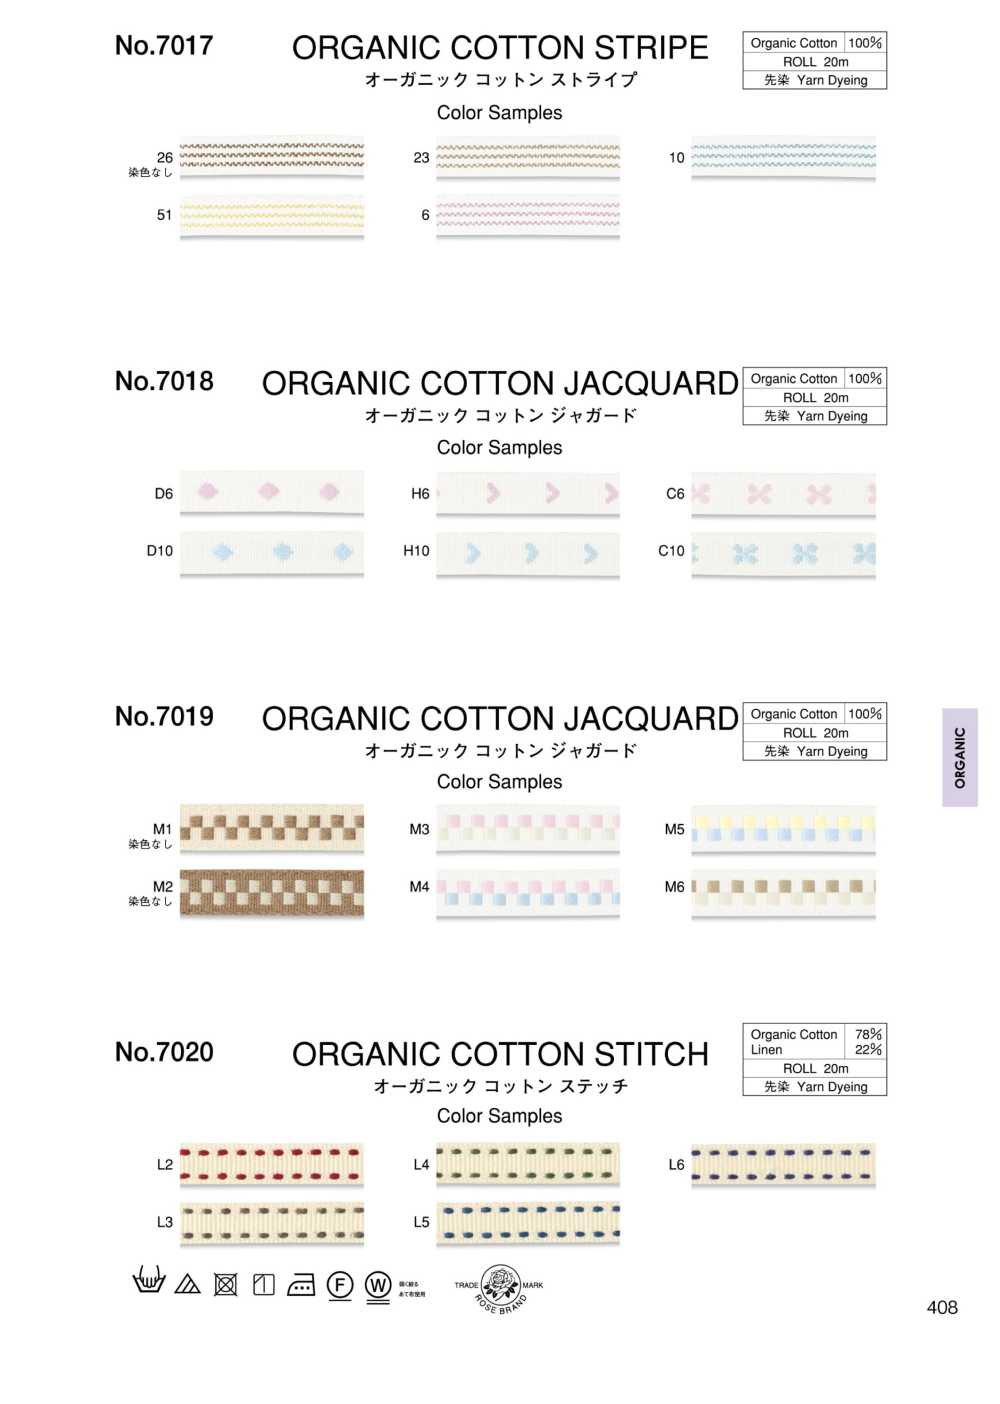 7017 Organic Cotton Stripes[Ribbon Tape Cord] ROSE BRAND (Marushin)